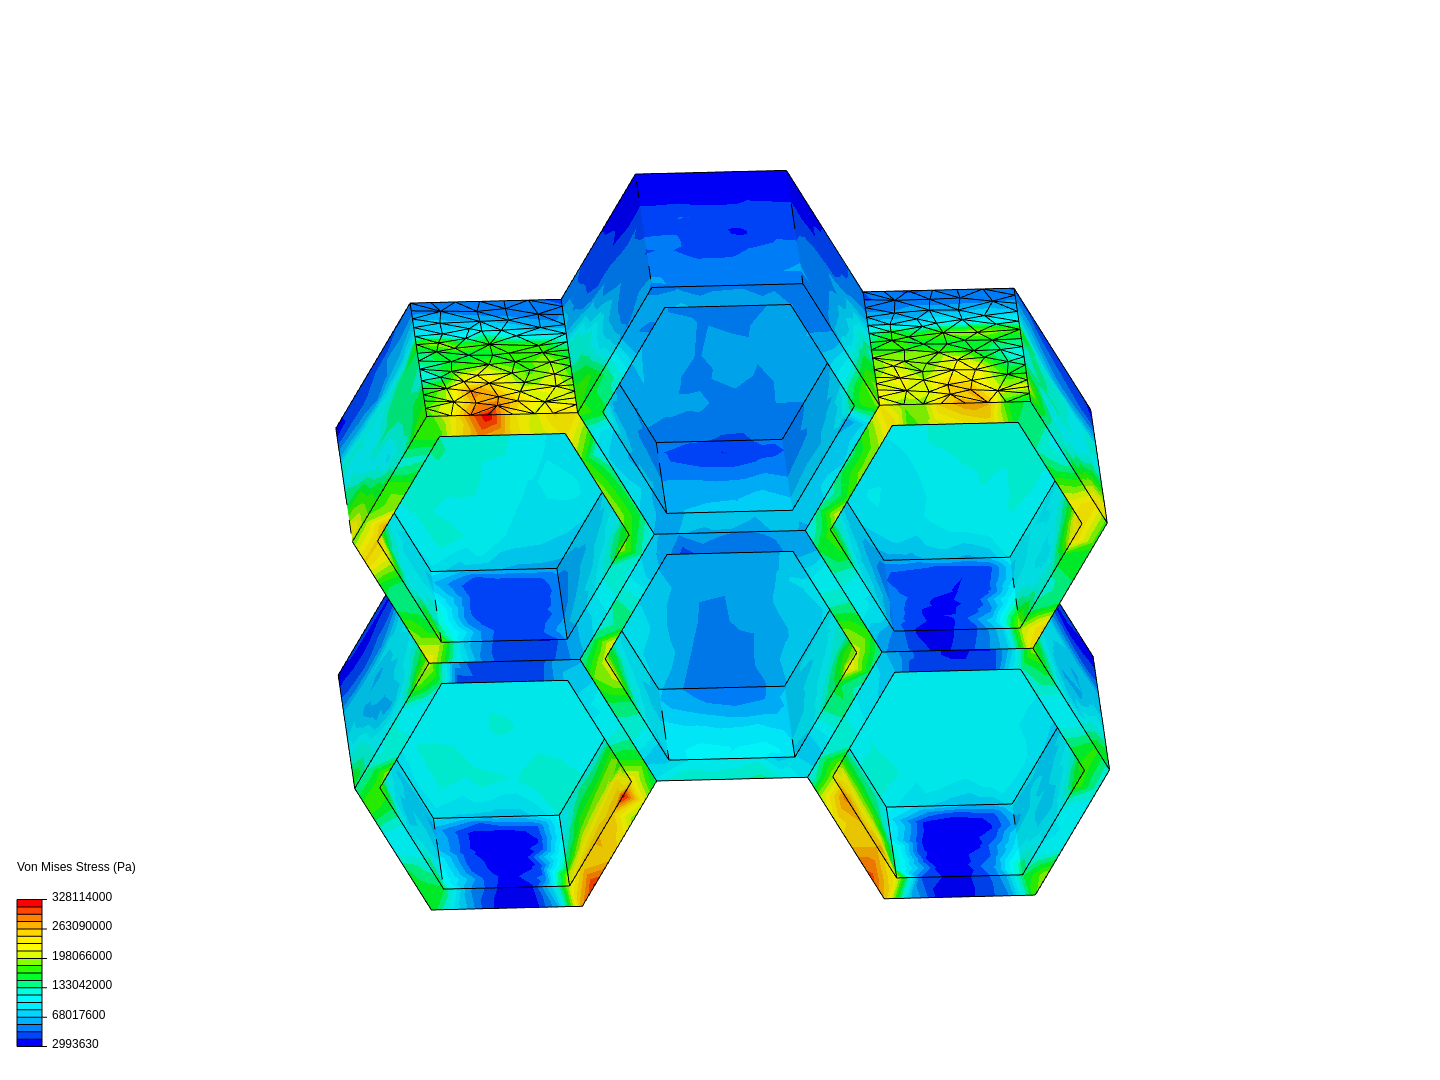 Hexagonal structure image